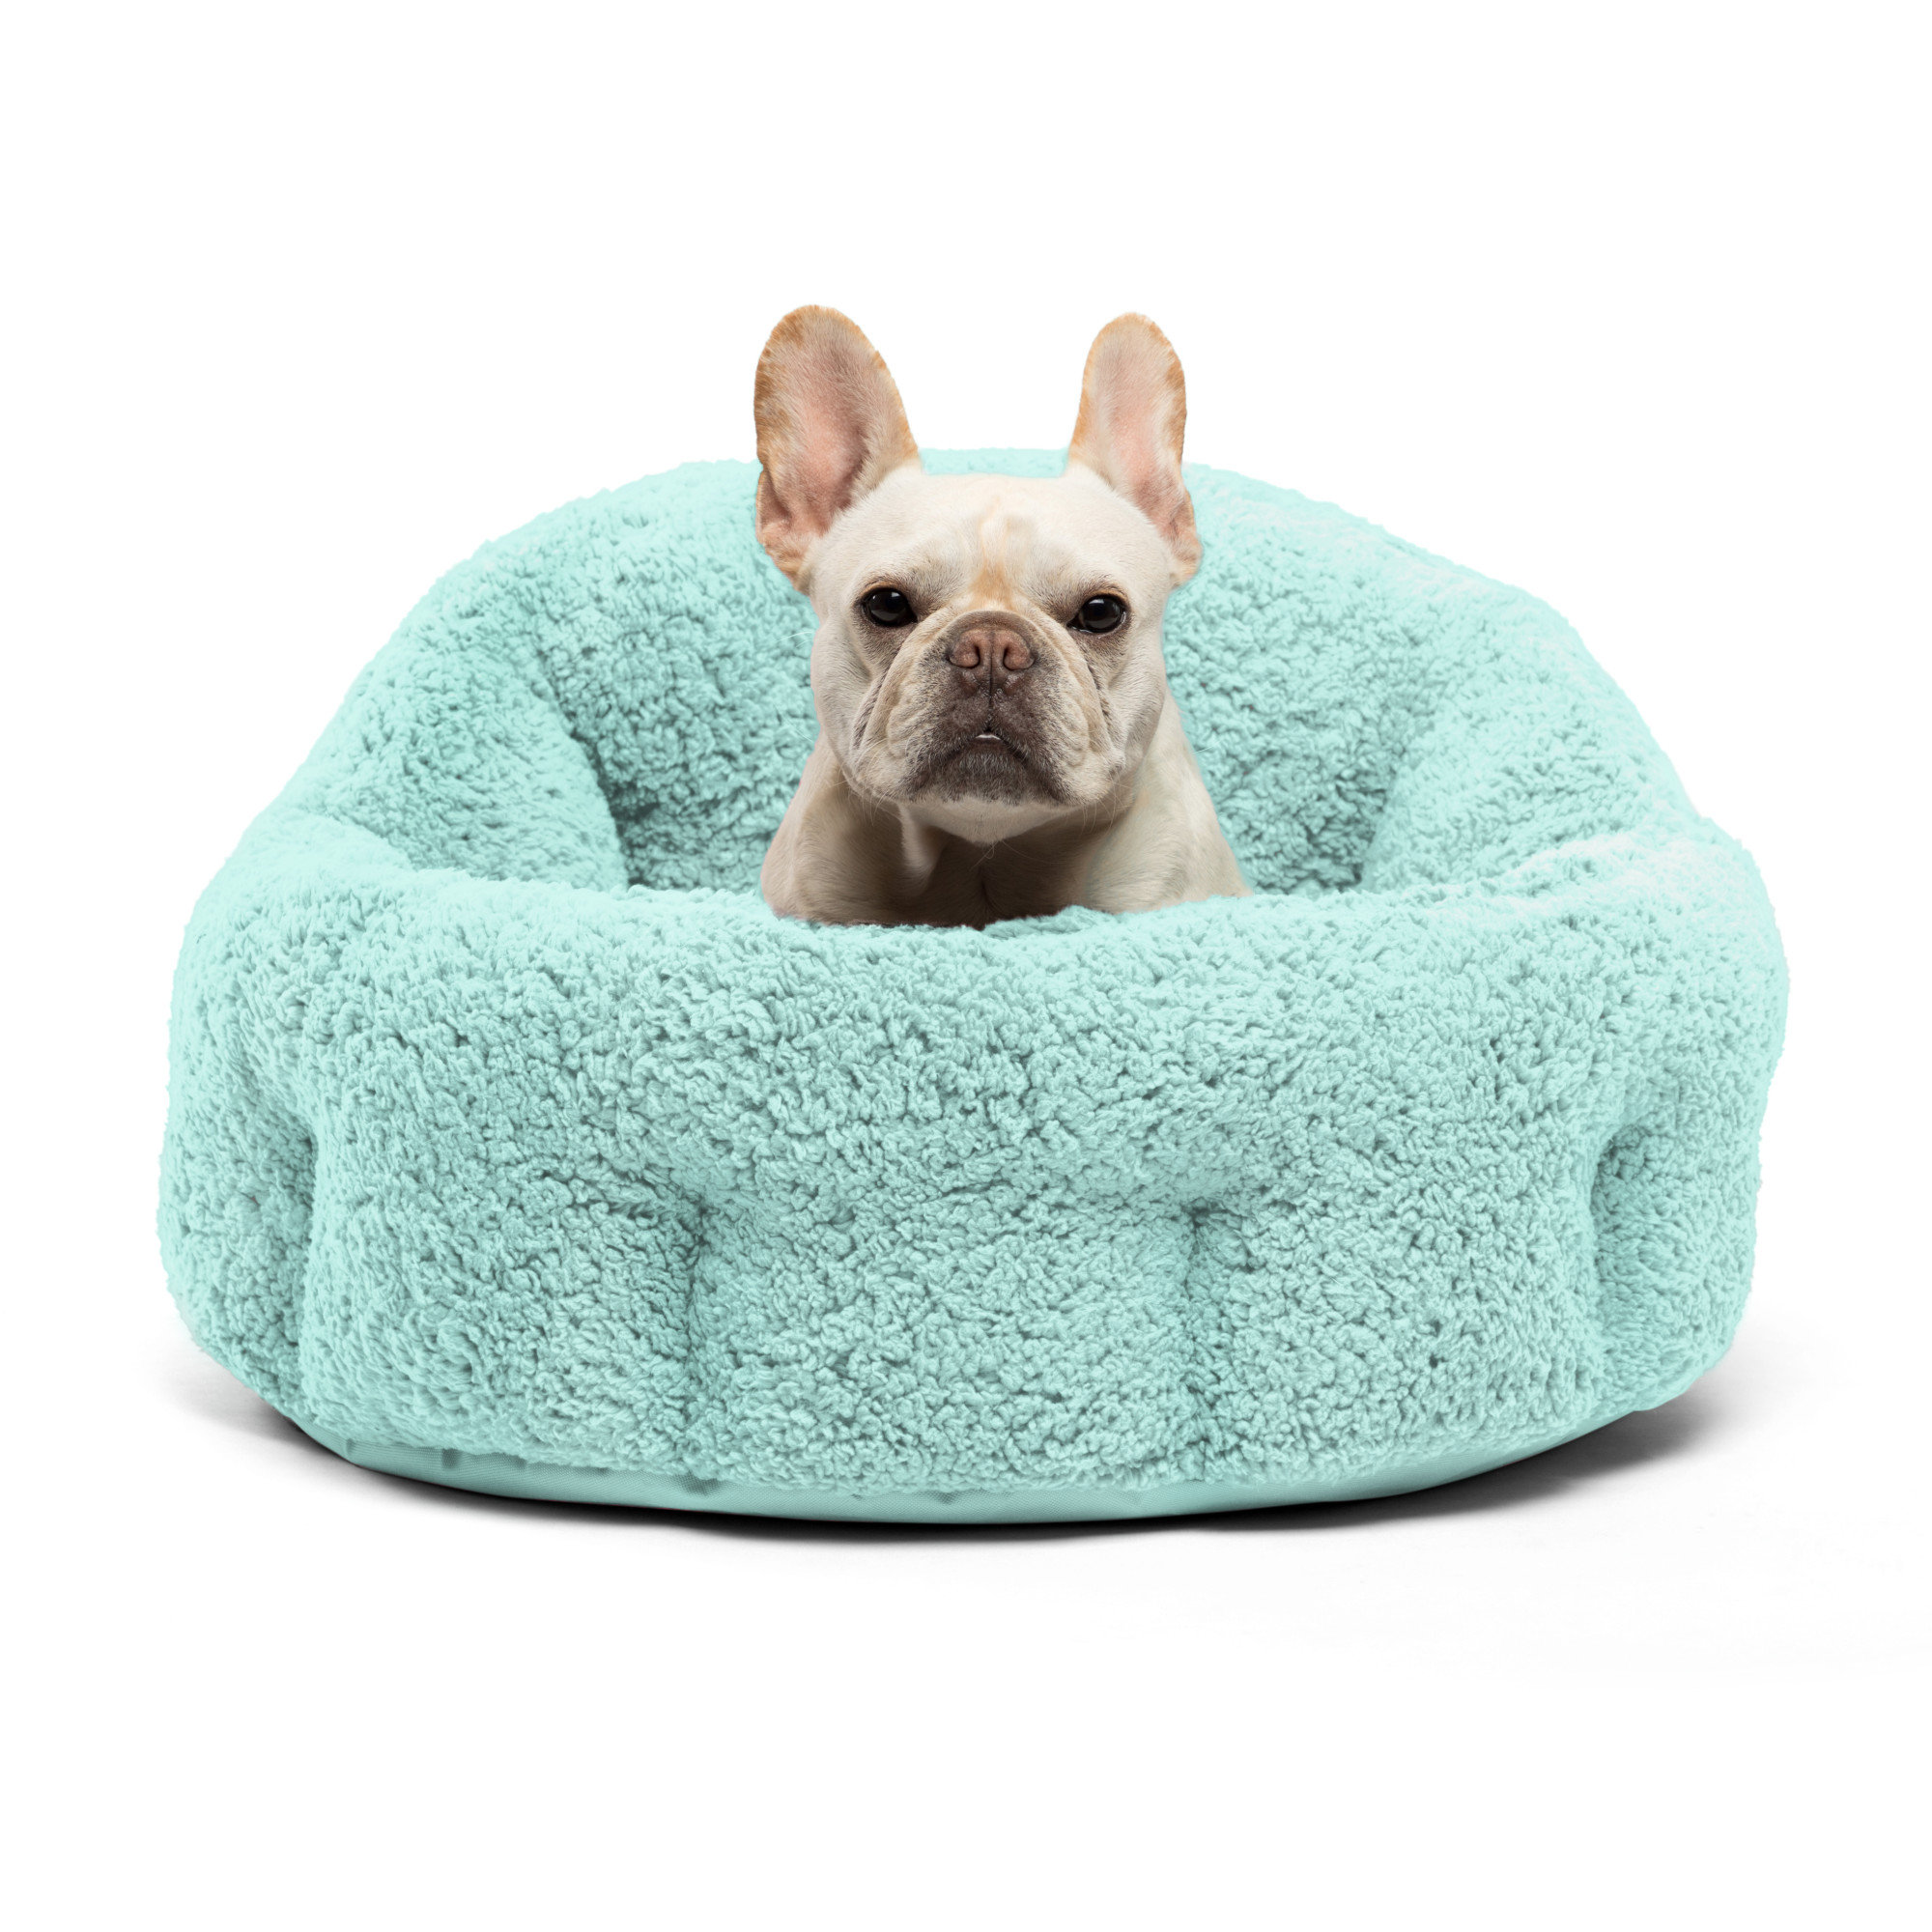 Discover Premium English Bulldog Beds